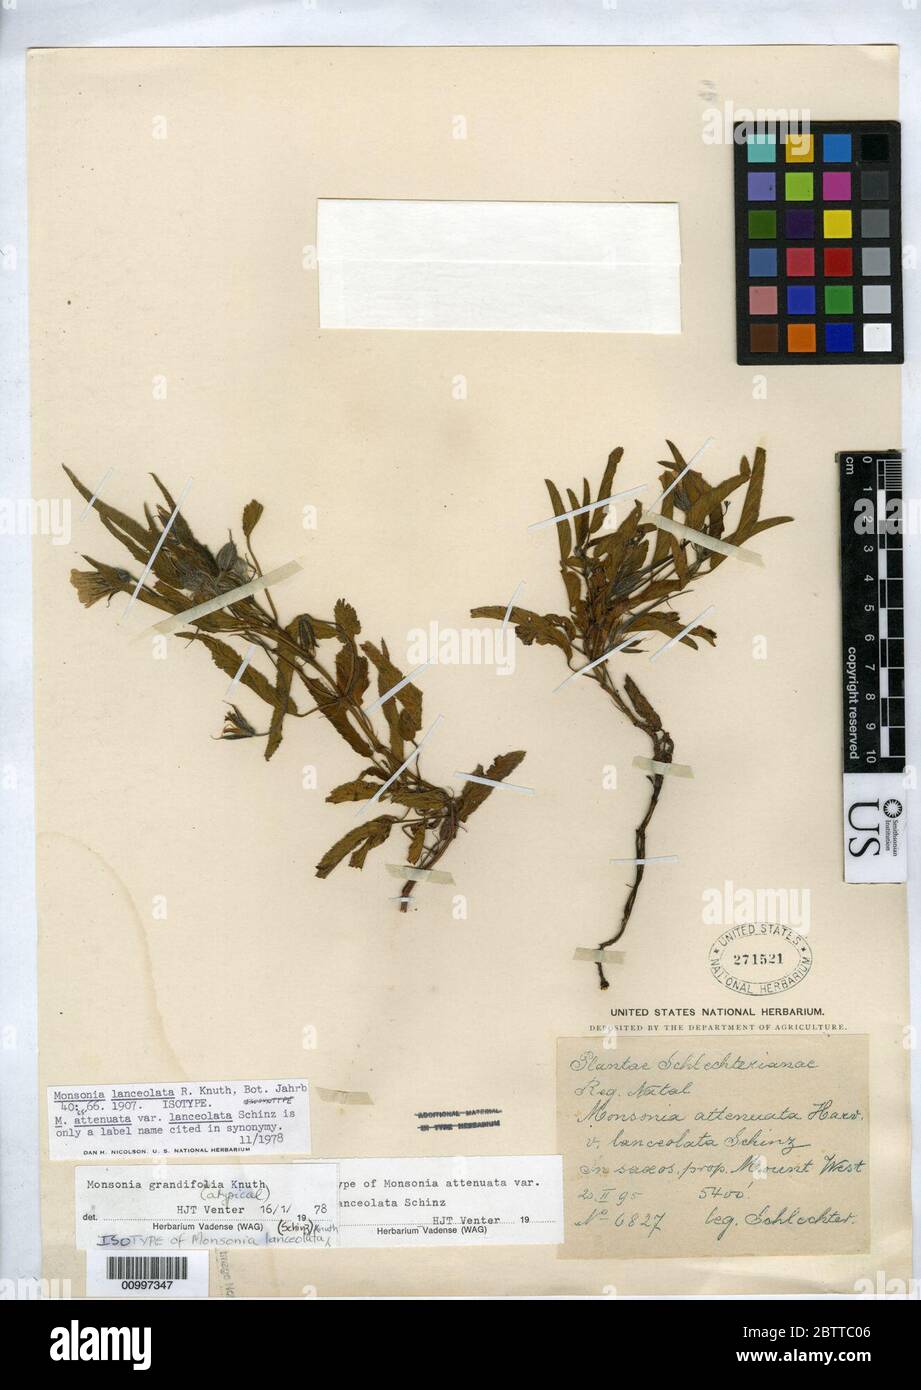 Monsonia attenuata var lanceolata Schinz. Stock Photo